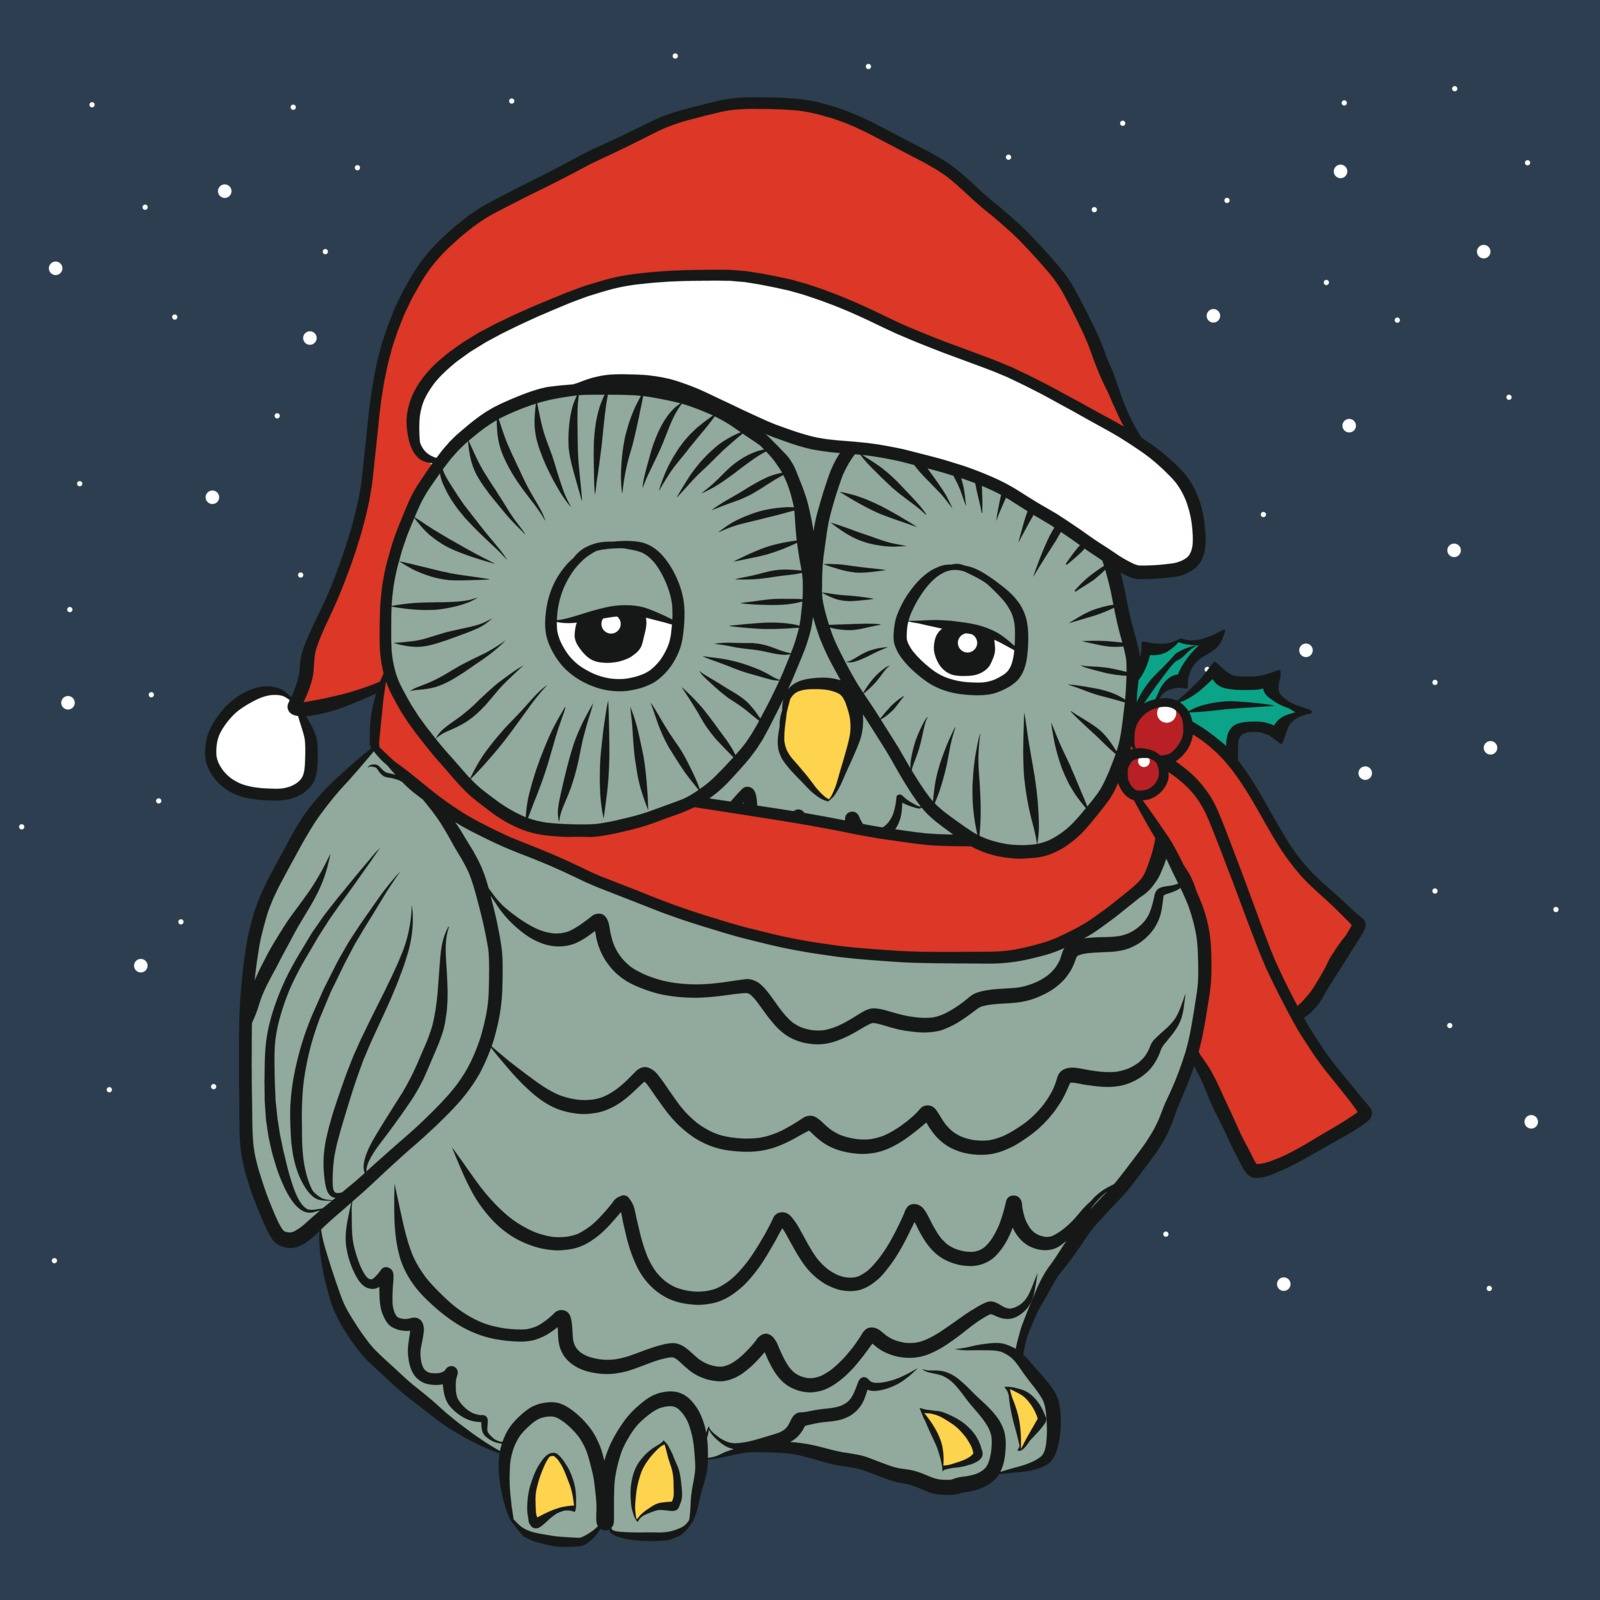 Owl wear santa hat in Christmas time cartoon vector illustration by Yoopho